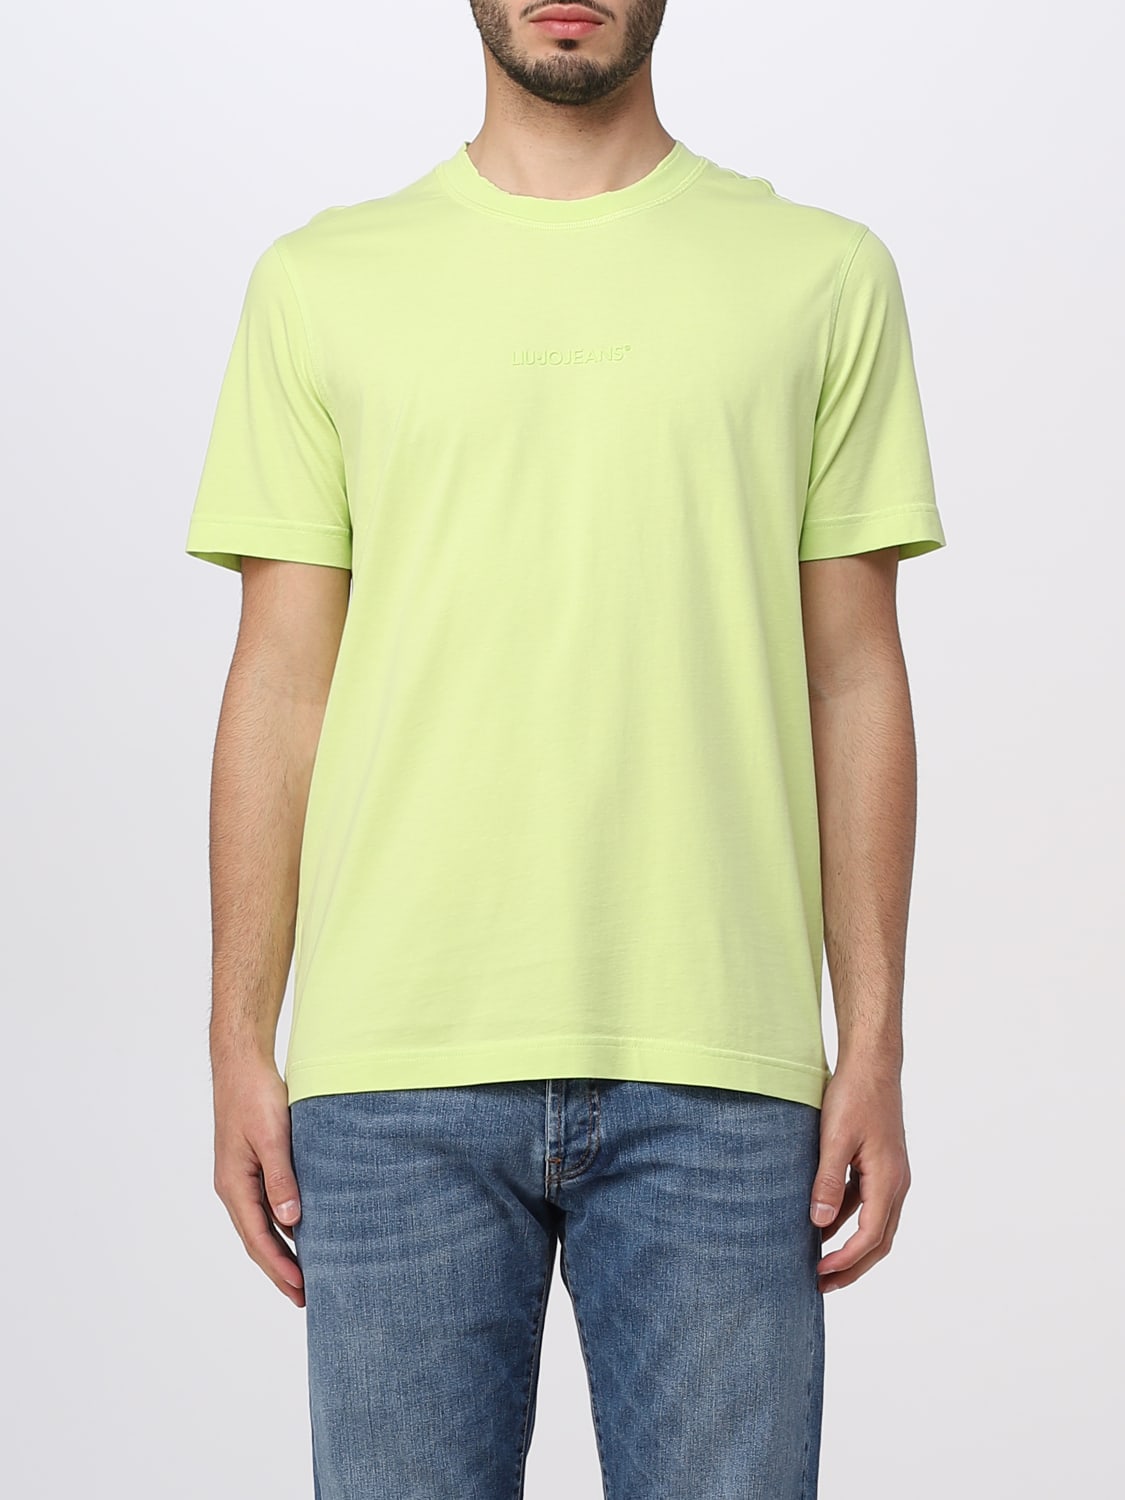 LIU JO: Camiseta para hombre, Lima | Liu Jo M123P204WASHSHIRT en línea en GIGLIO.COM